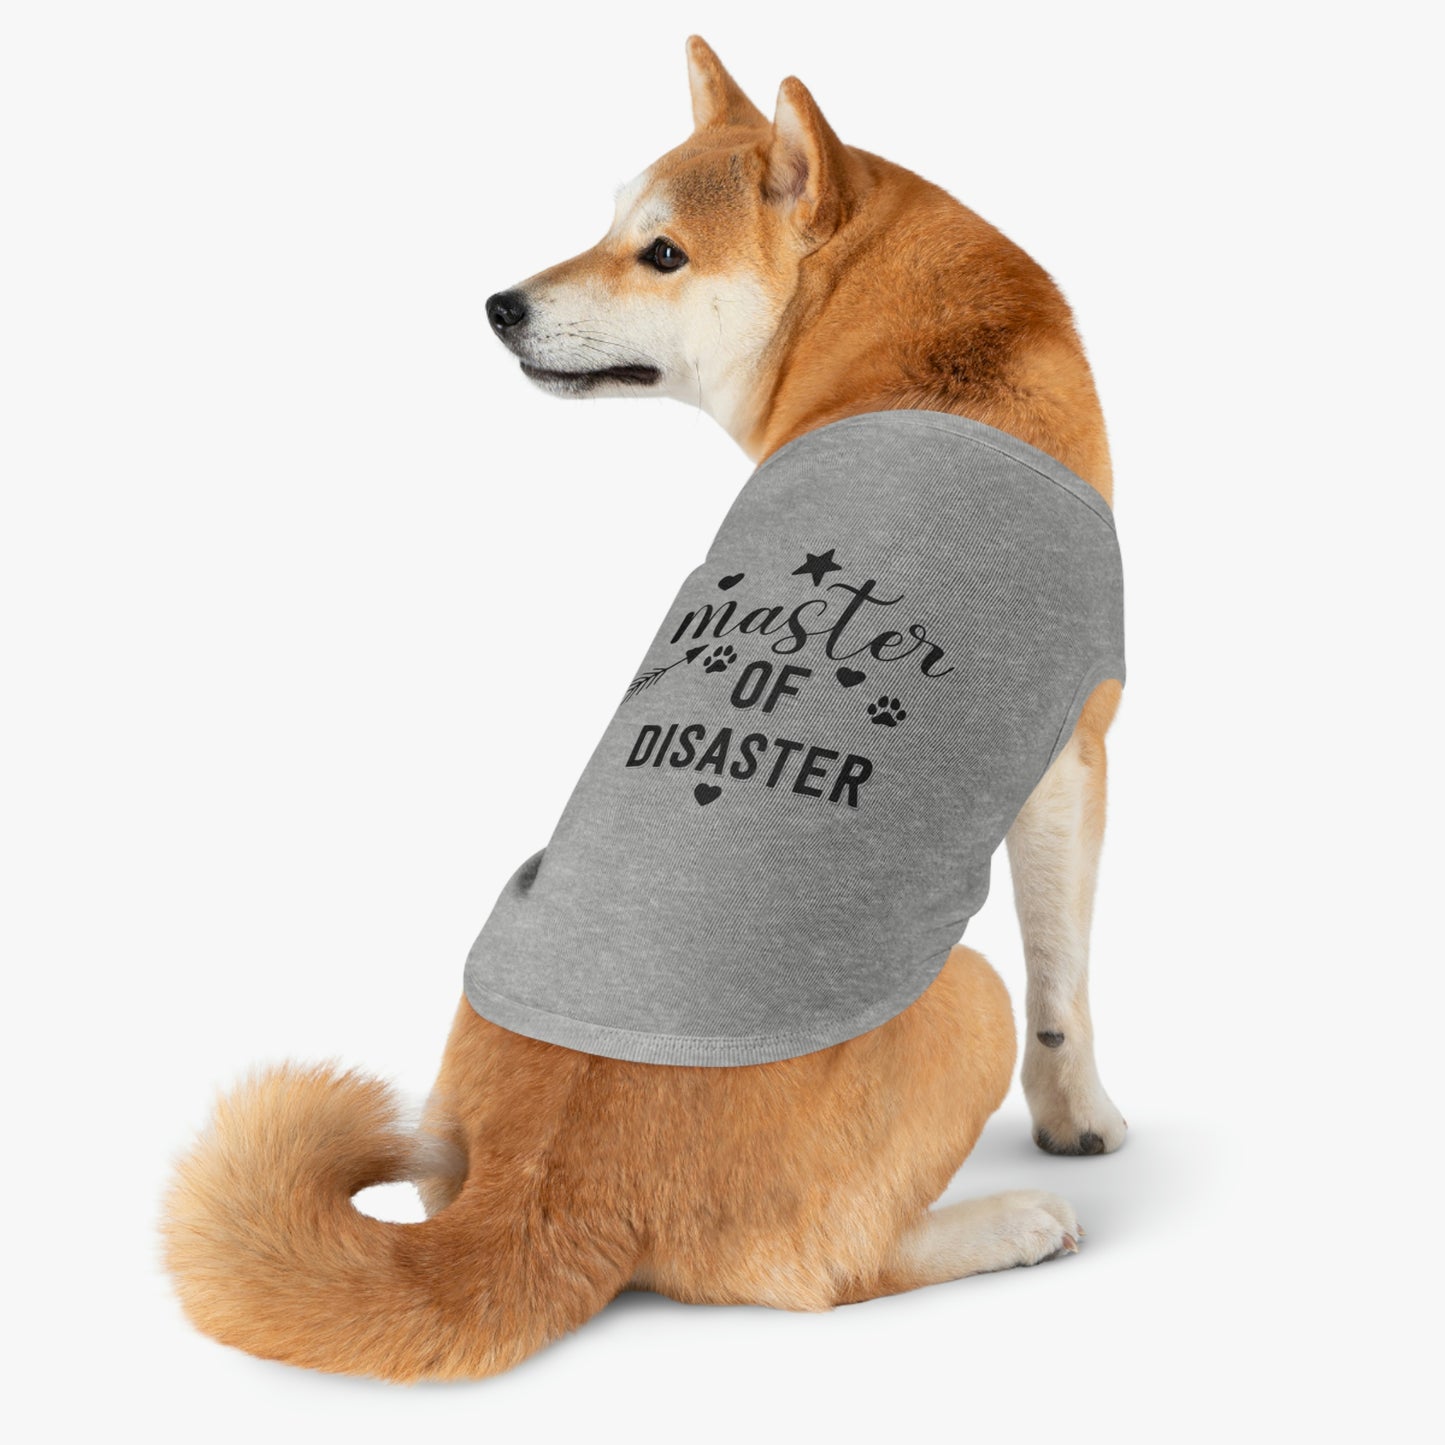 Master of Disaster Dog Pet Tank Top Cute Pet Clothes